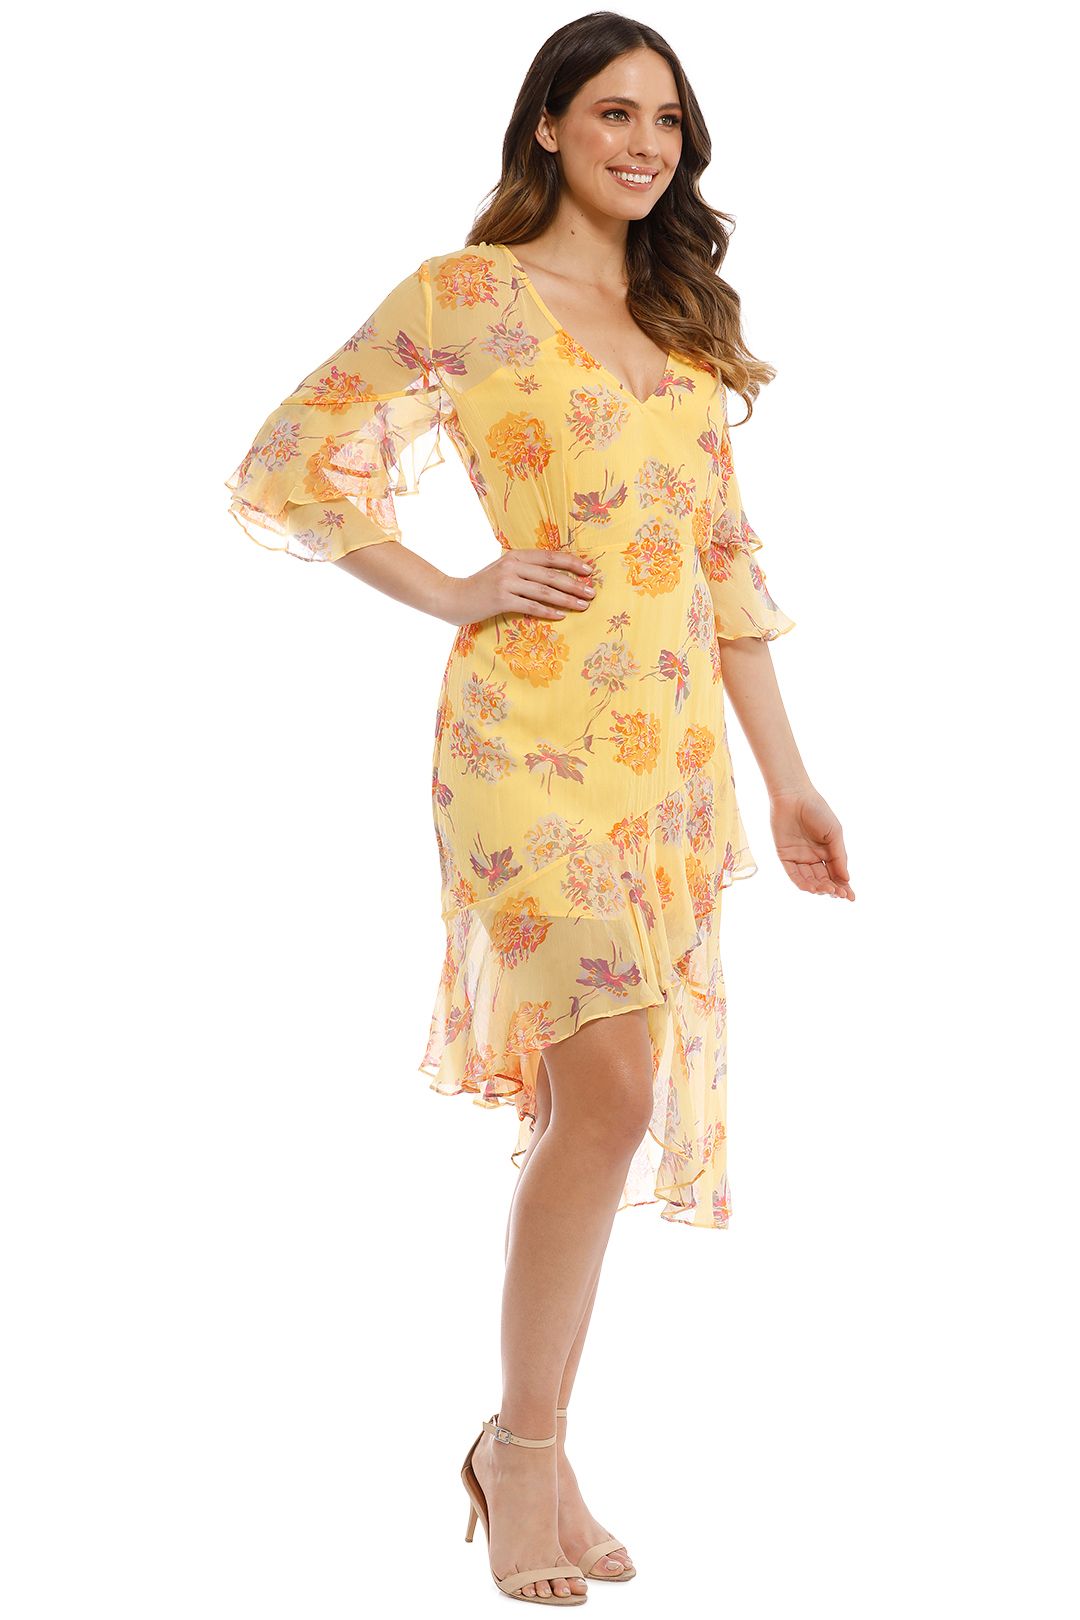 Talulah - Cerulean Midi Dress - Yellow Vintage Floral - Side